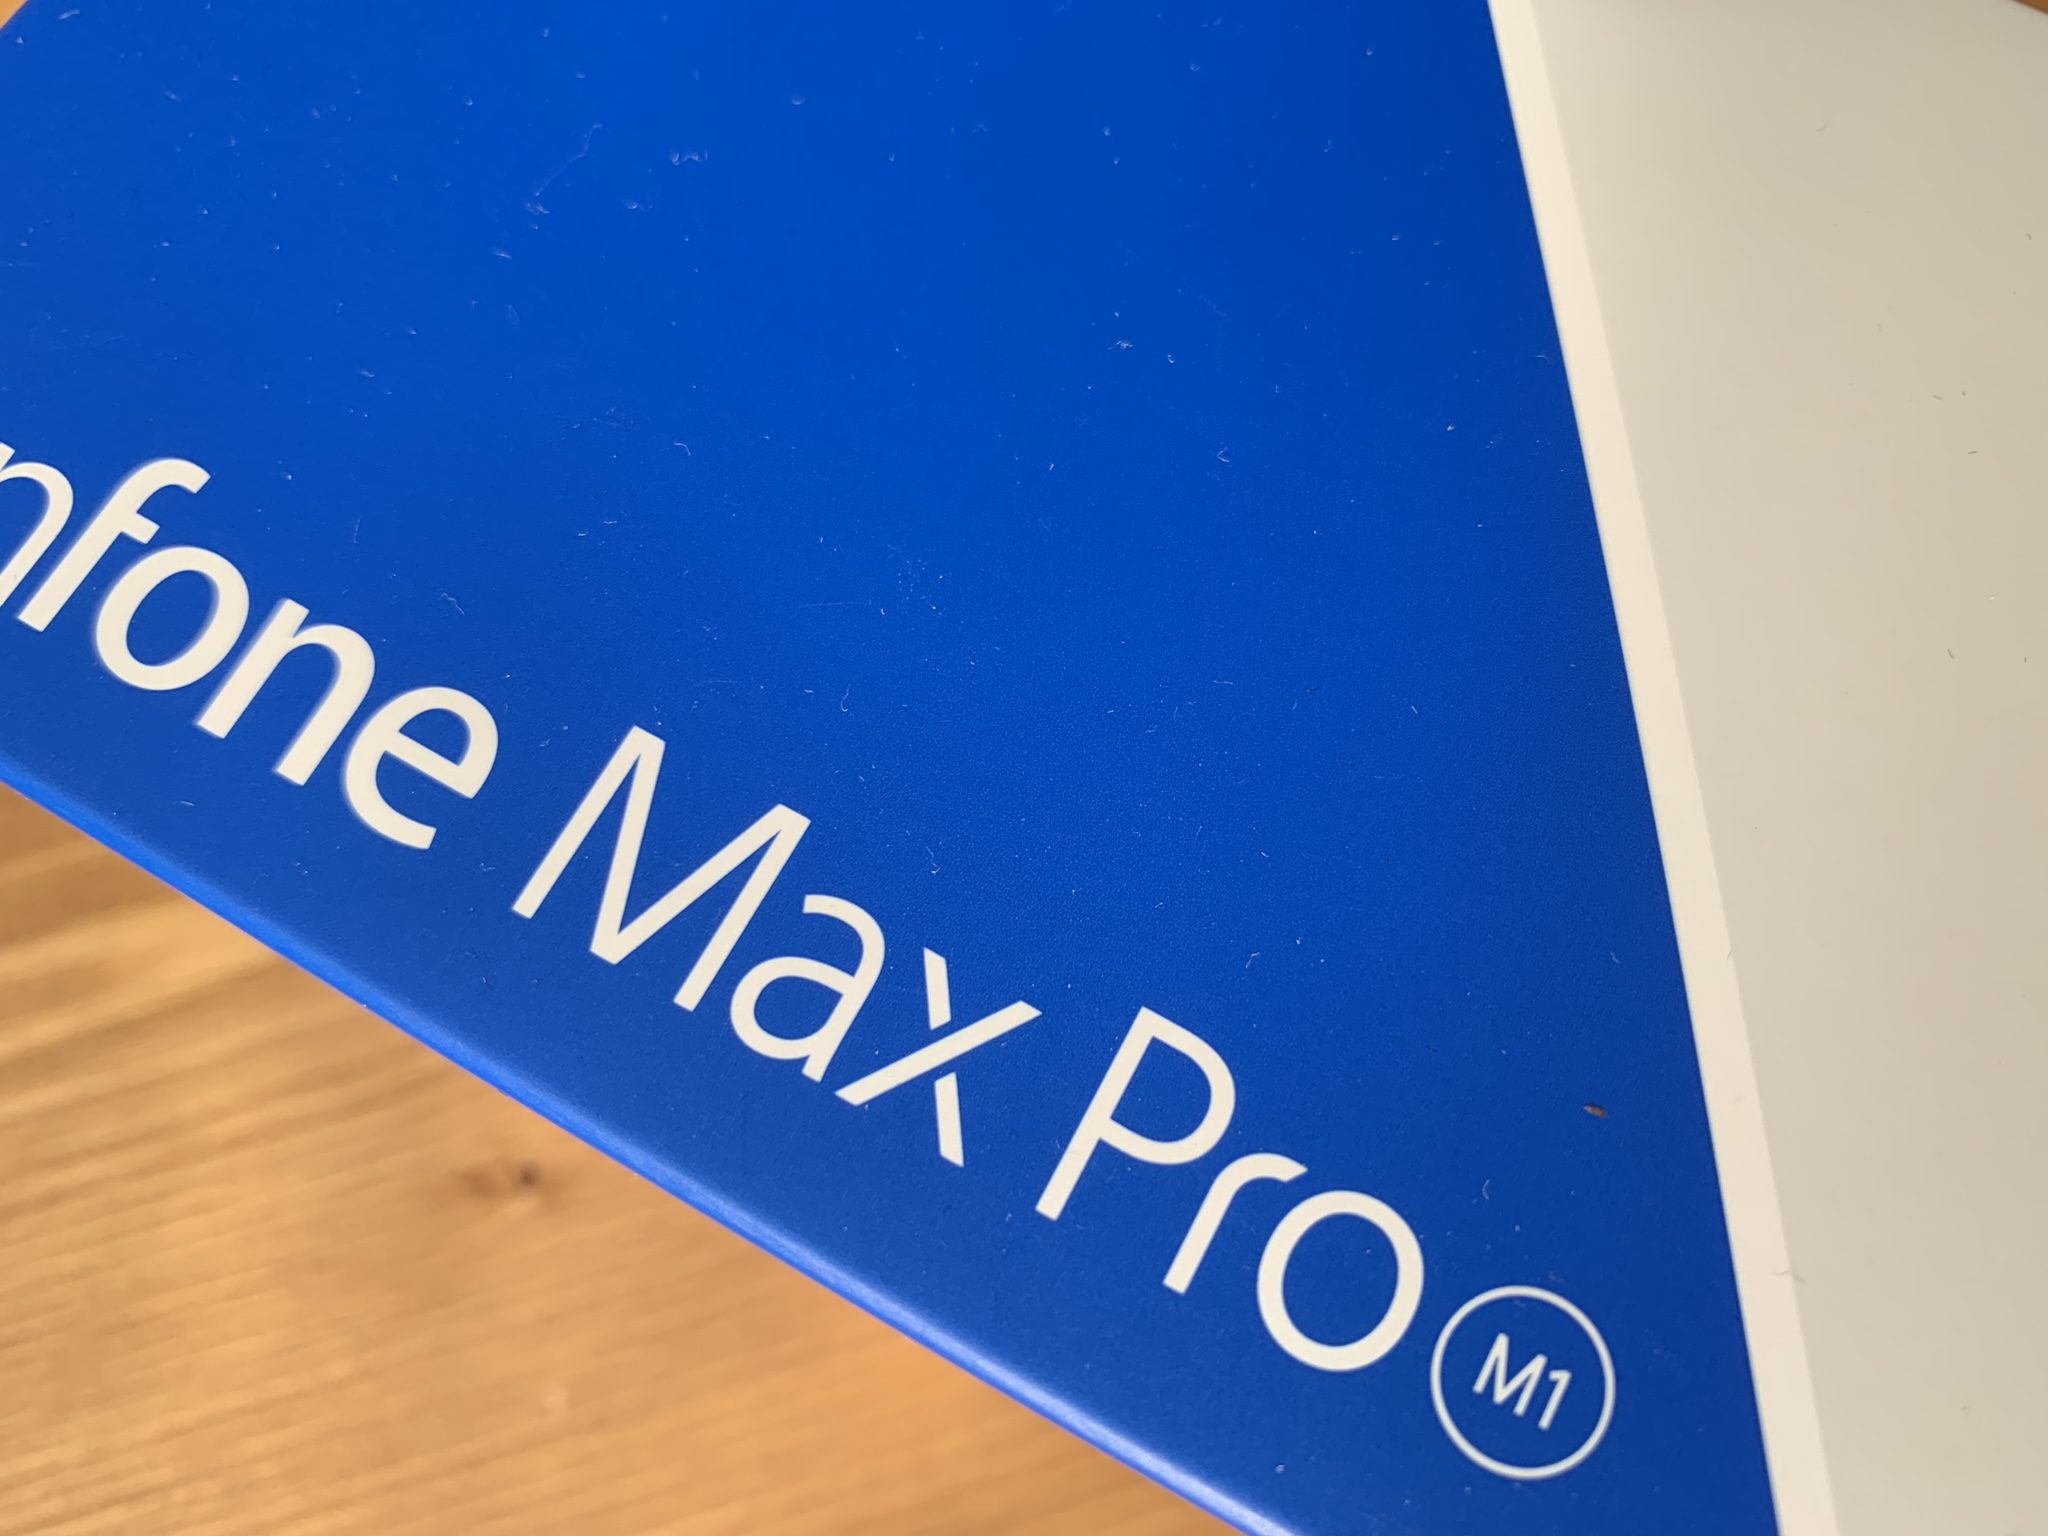 Zenfone Max Pro M1